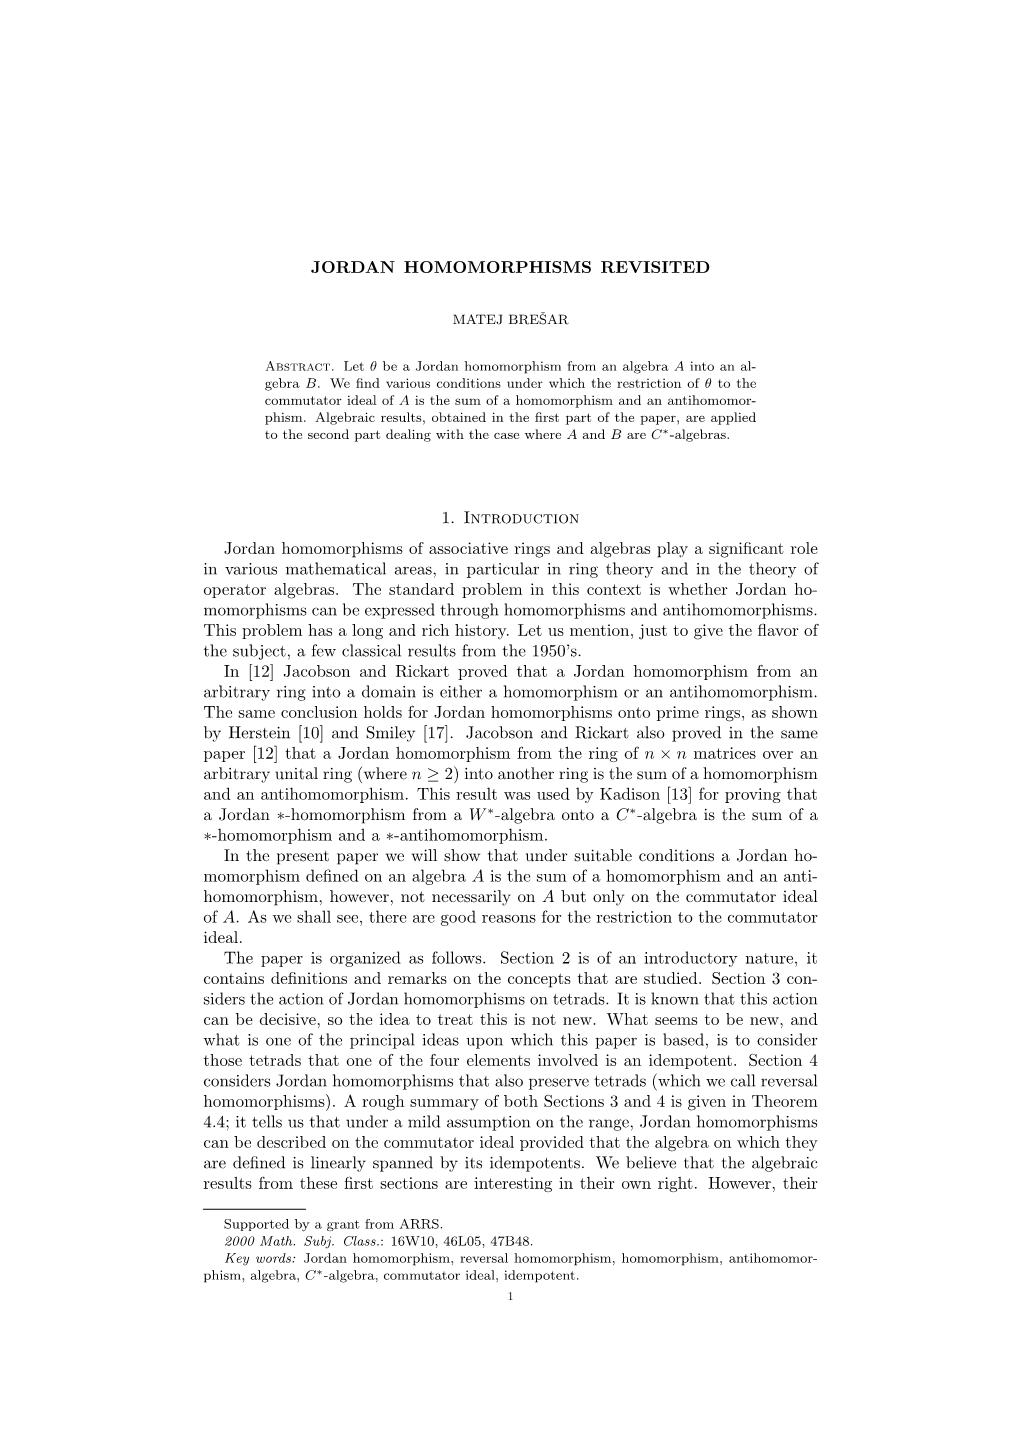 JORDAN HOMOMORPHISMS REVISITED 1. Introduction Jordan